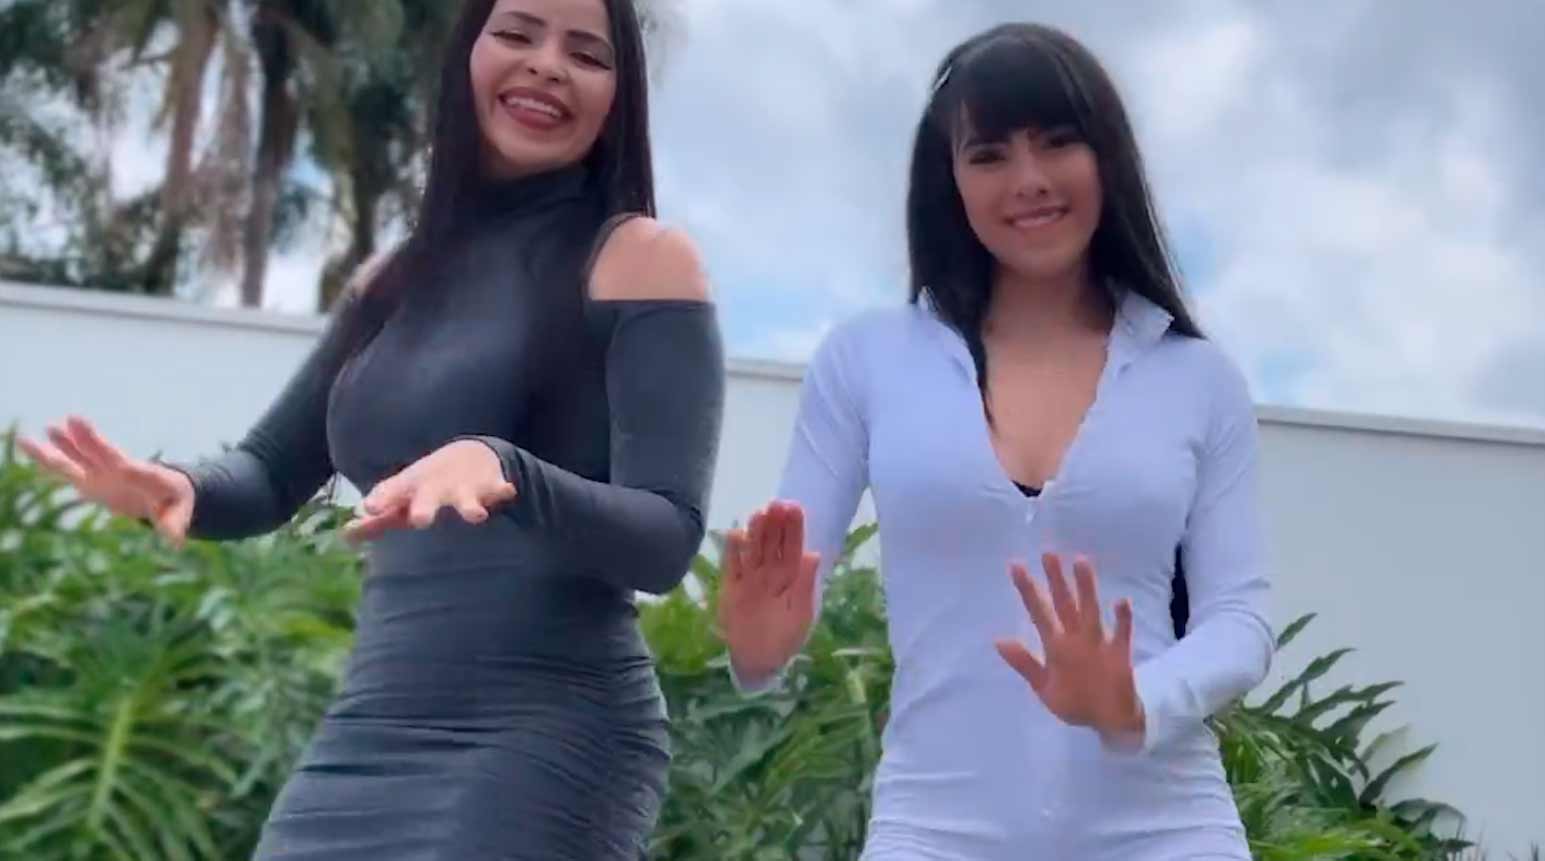 Video: Juliana Caetano a Nadila z Bandy Djavu oslavují úspěch na Instagramu tancem. Fotky a video: Reprodukce Instagram @julianabondecasa